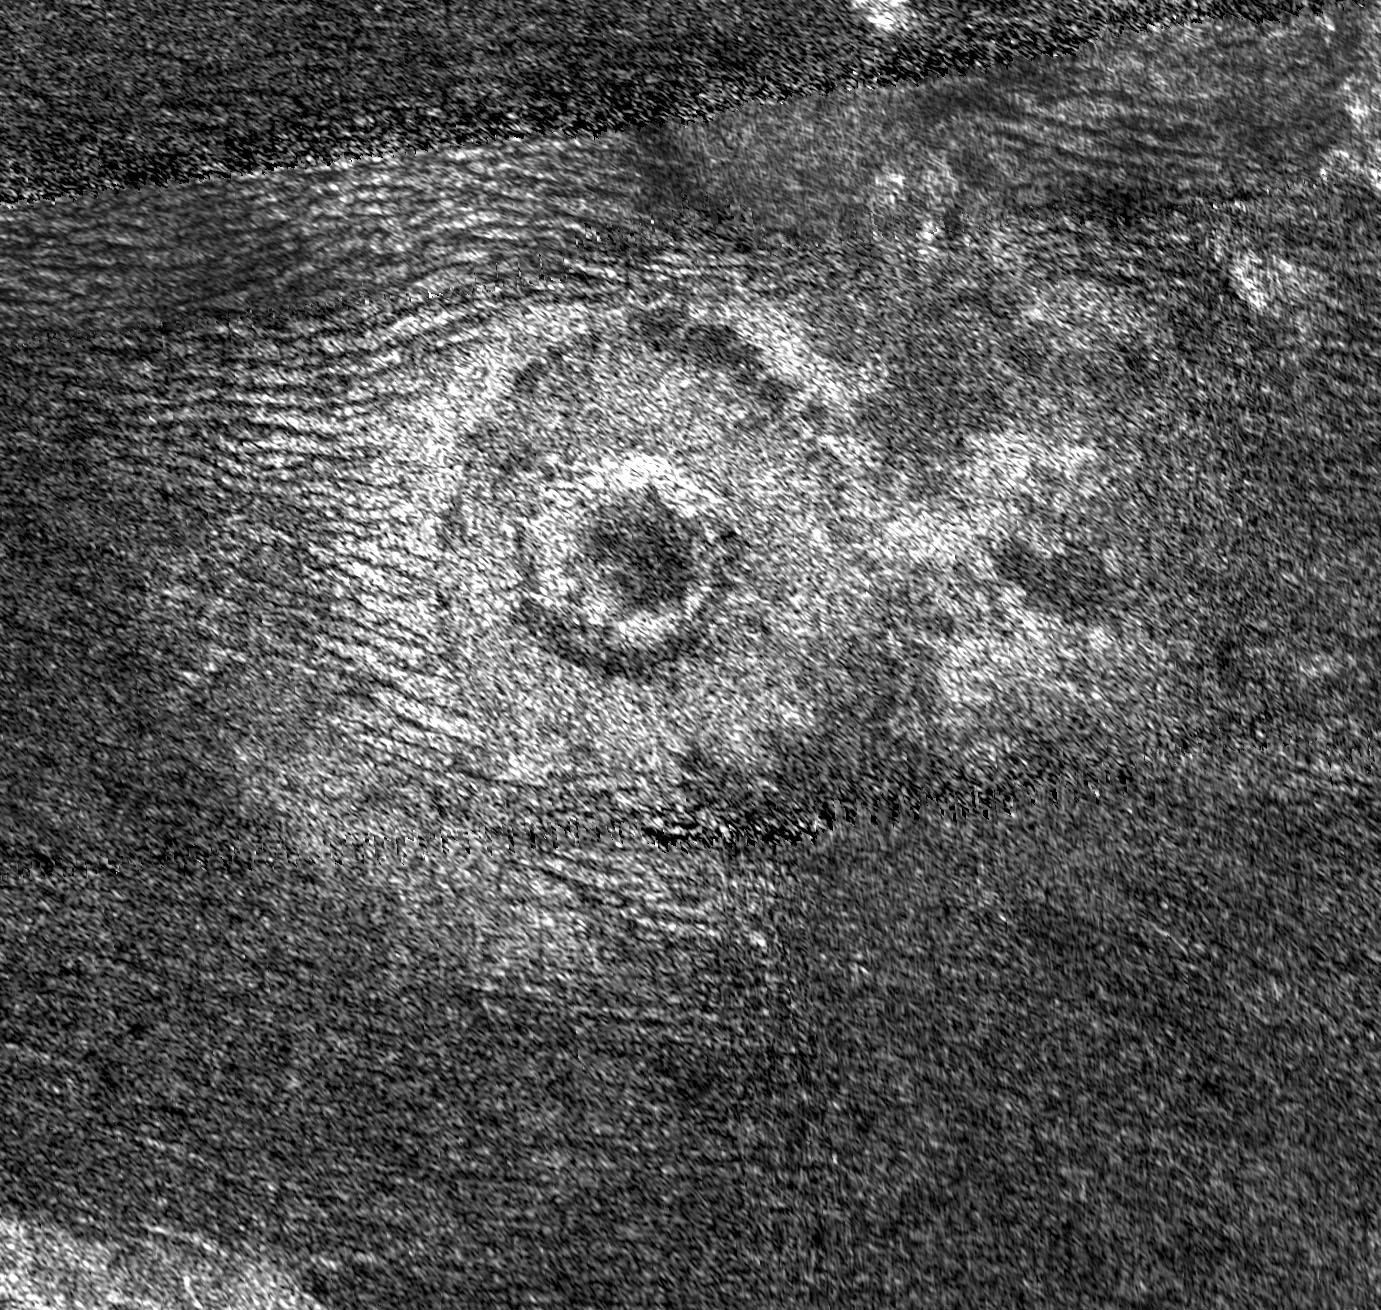 Cassini's Titan Radar Mapper imaged an eighth impact crater on June 21, 2011.